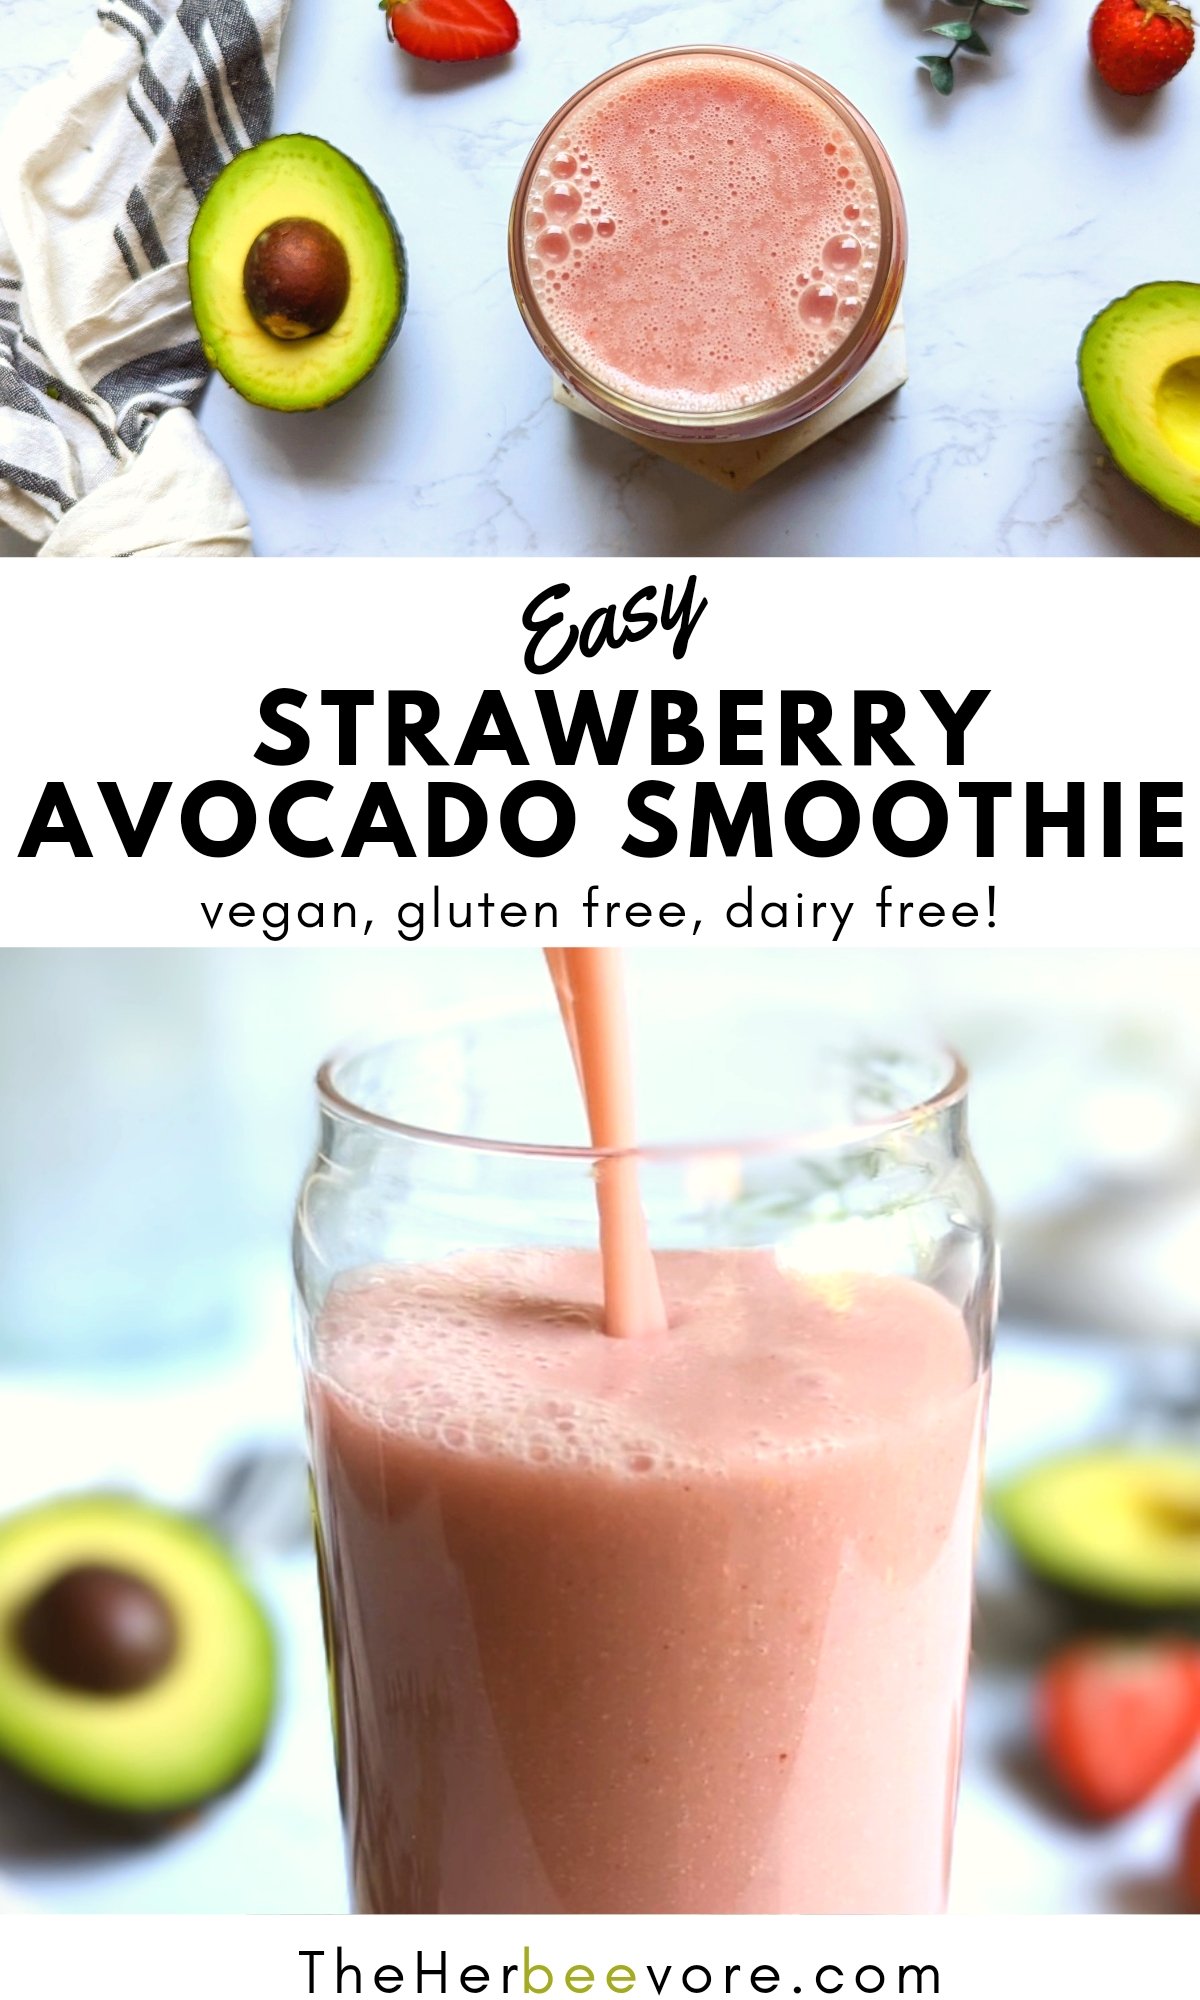 strawberry avocado smoothie recipe with banana flax water avocadoes and strawberries vegan gluten free no milk no yogurt